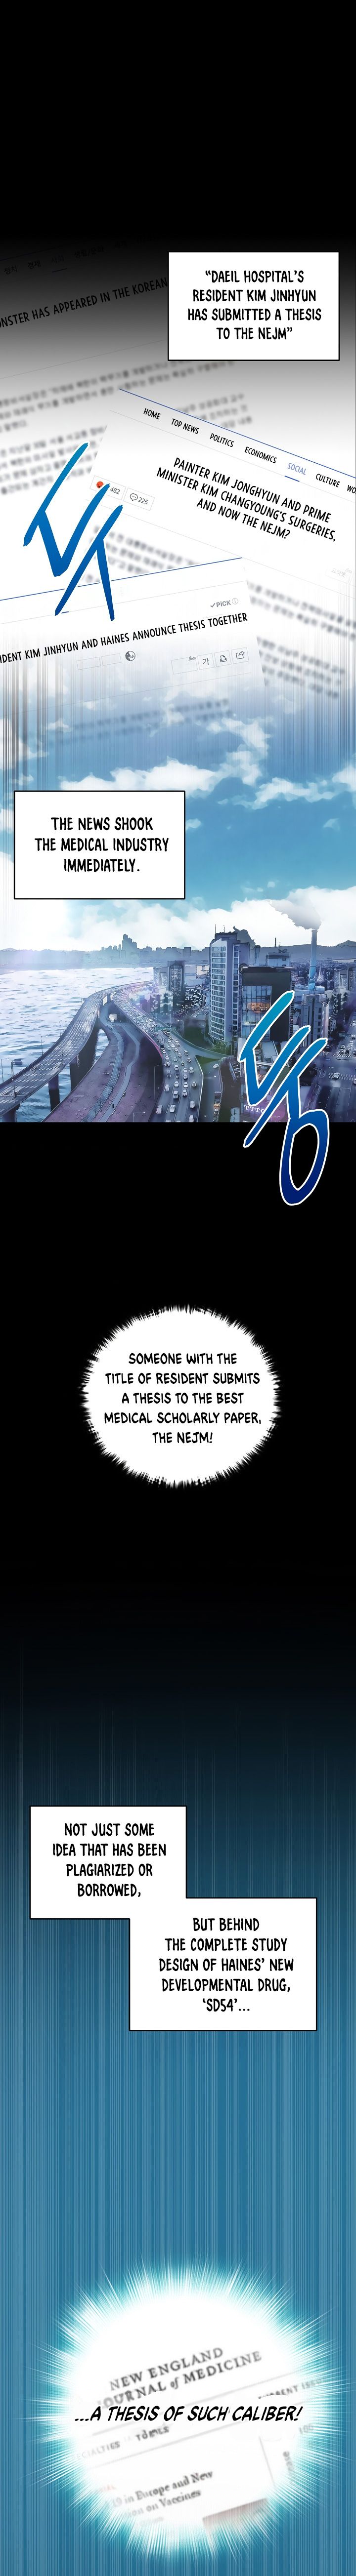 Medical Return - Chapter 90 Page 2